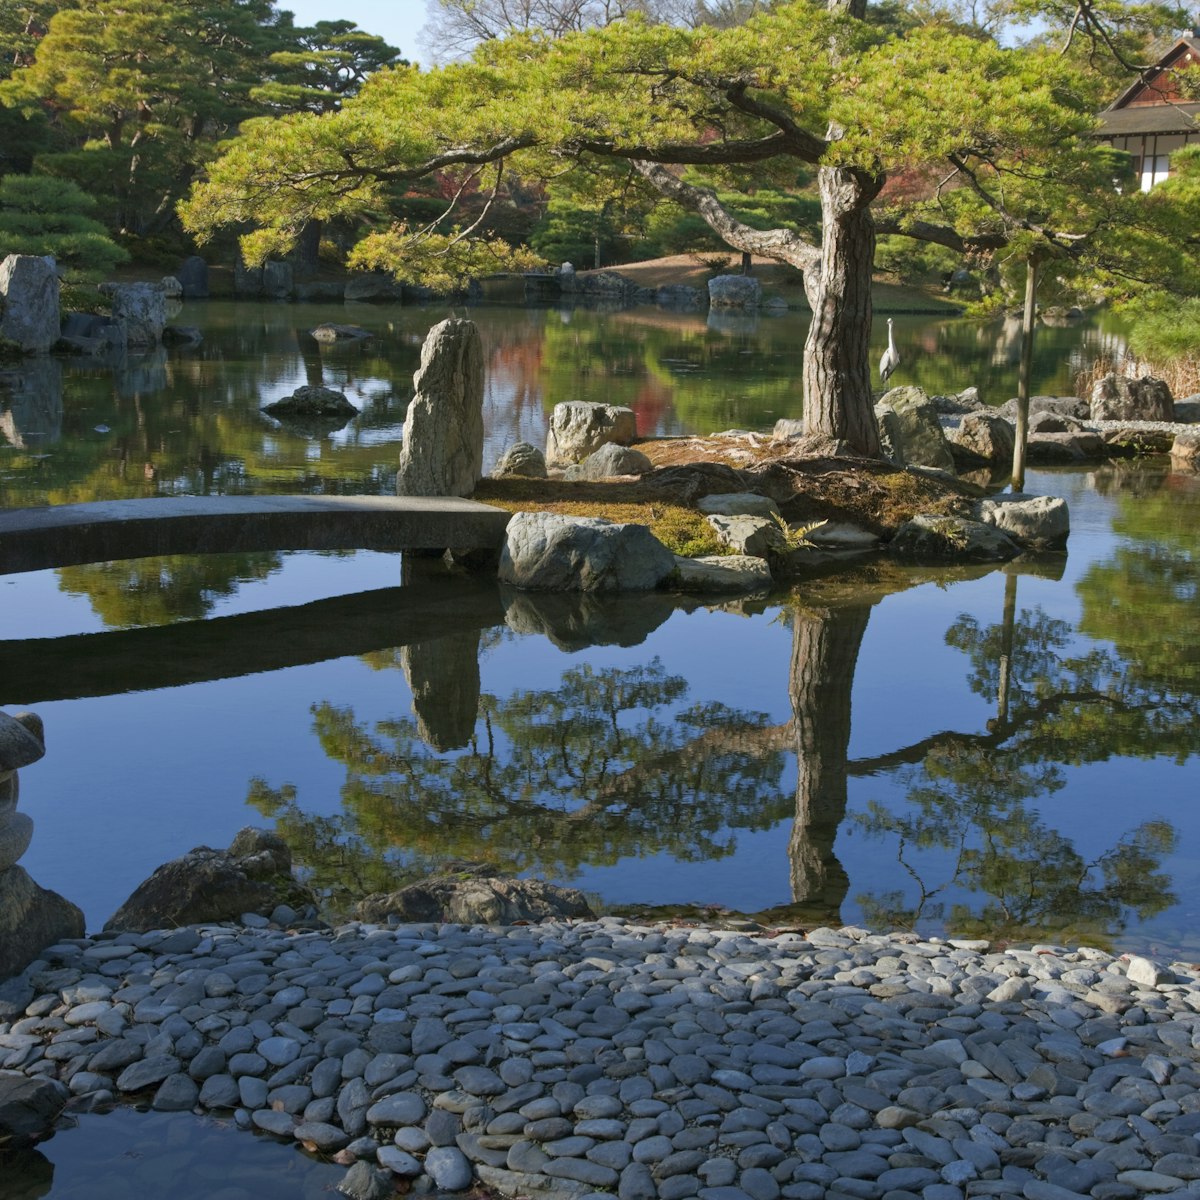 Katsura Imperial Villa Garden in Kyoto, Japan